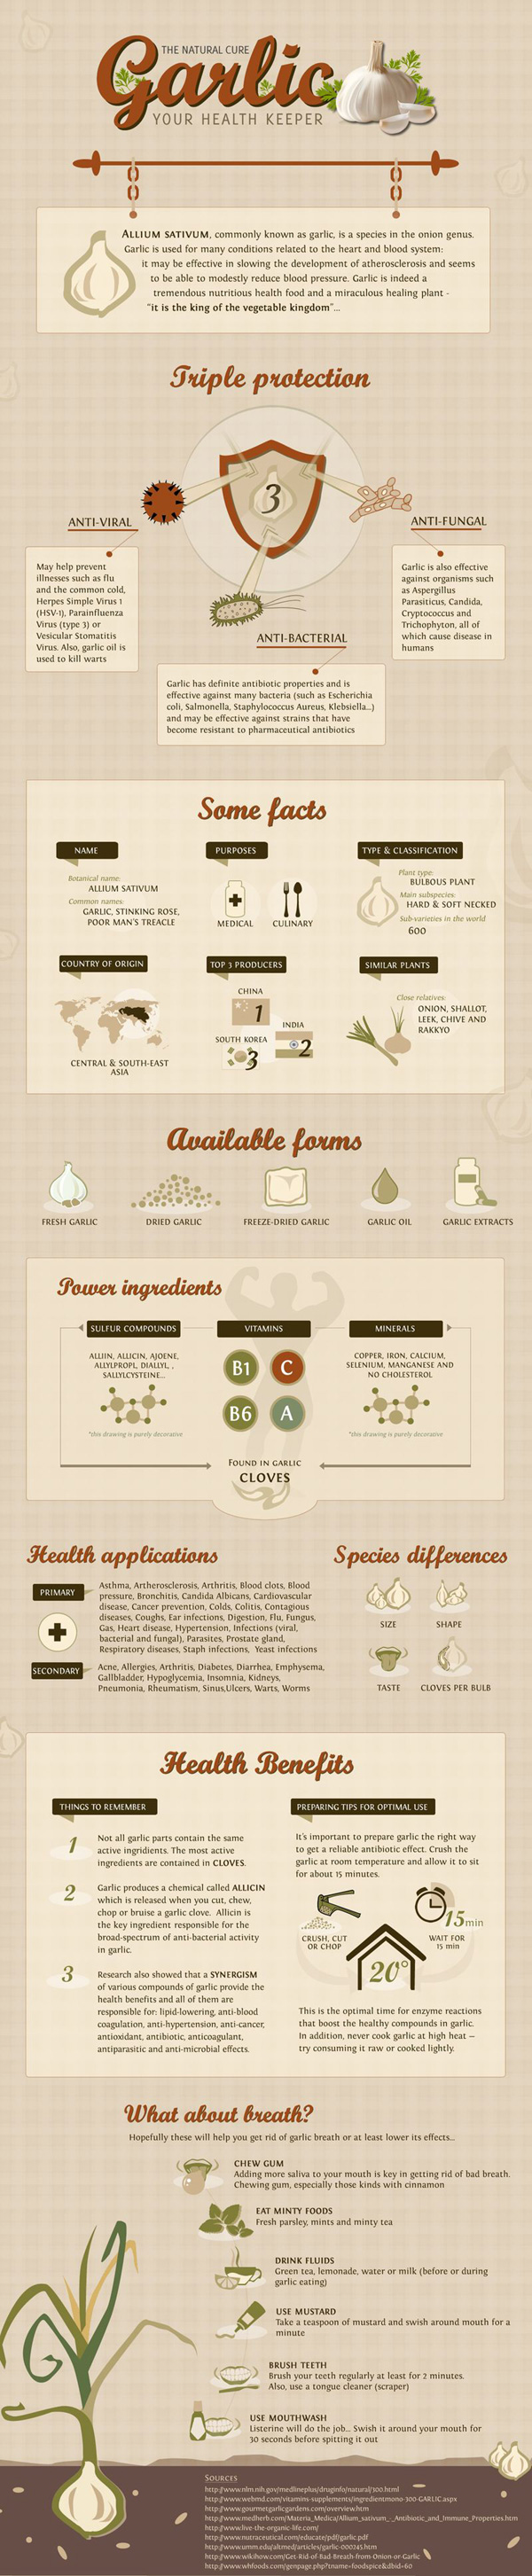 Survival benefits of garlic